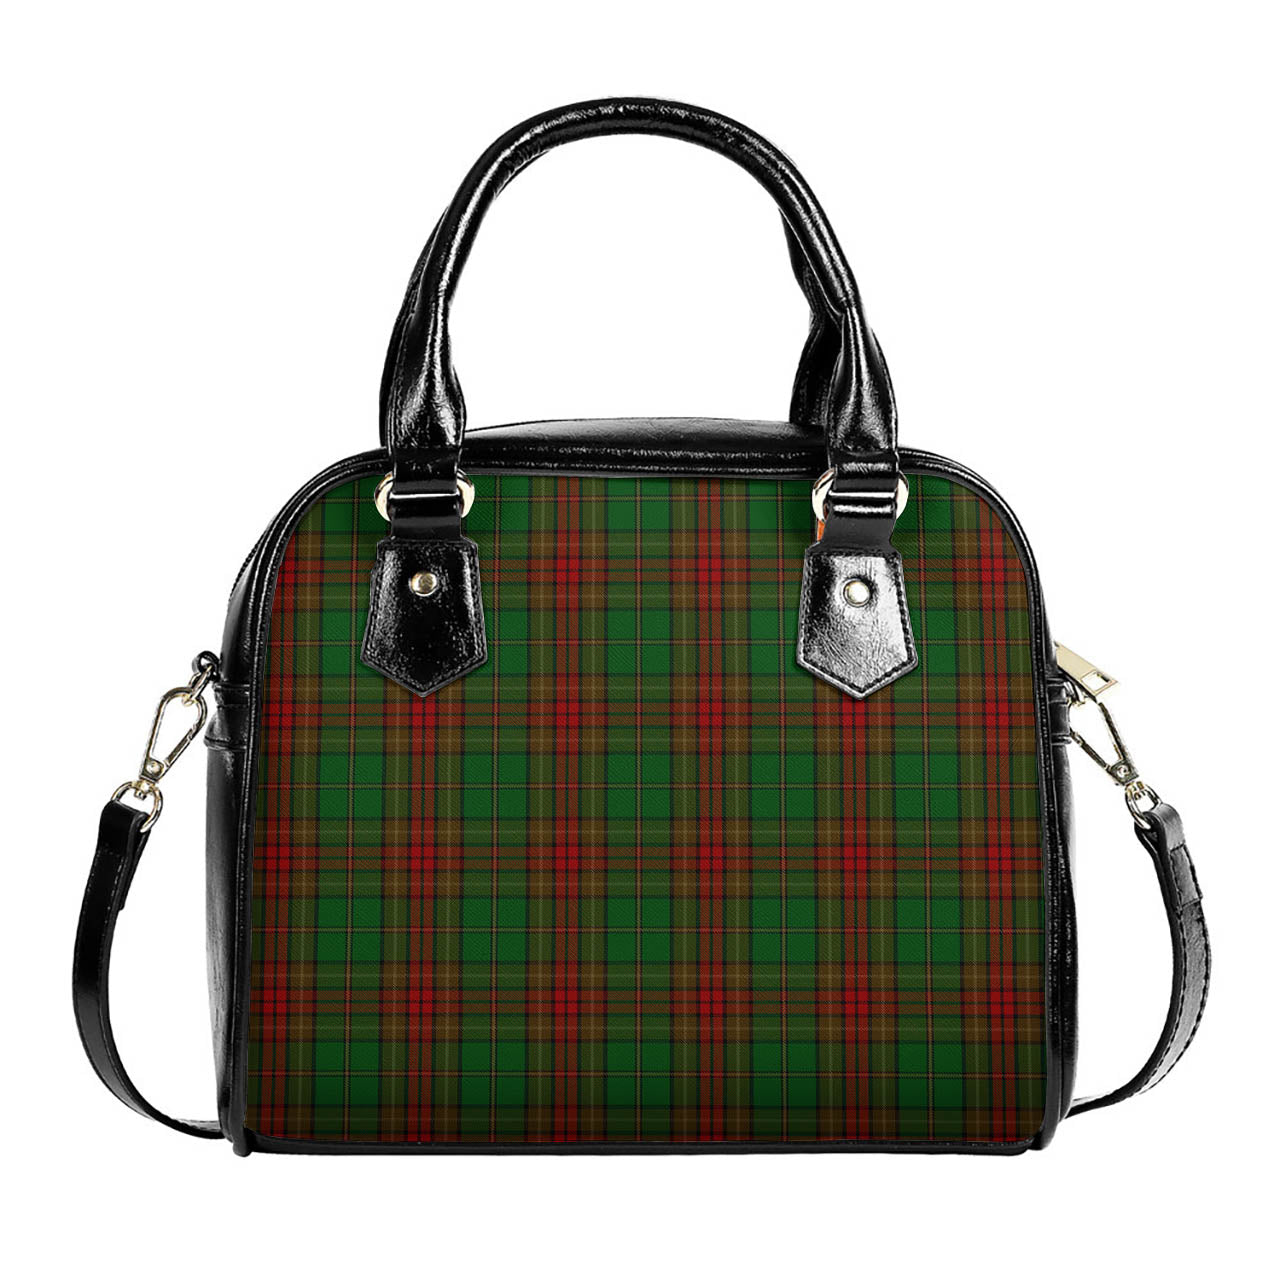 Cavan County Ireland Tartan Shoulder Handbags One Size 6*25*22 cm - Tartanvibesclothing